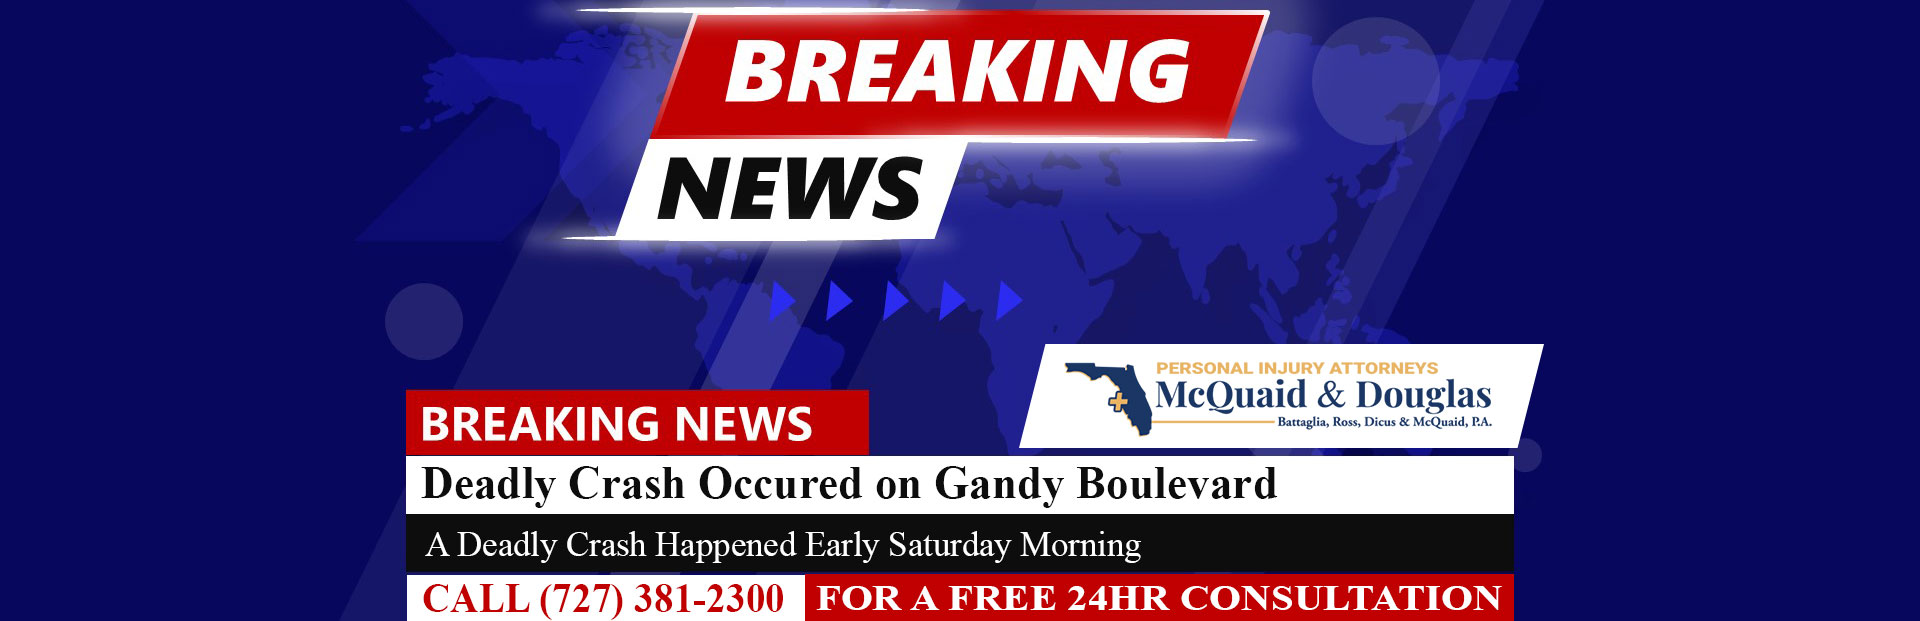 [12-04-23] Tampa Police Investigate Deadly Crash on Gandy Boulevard